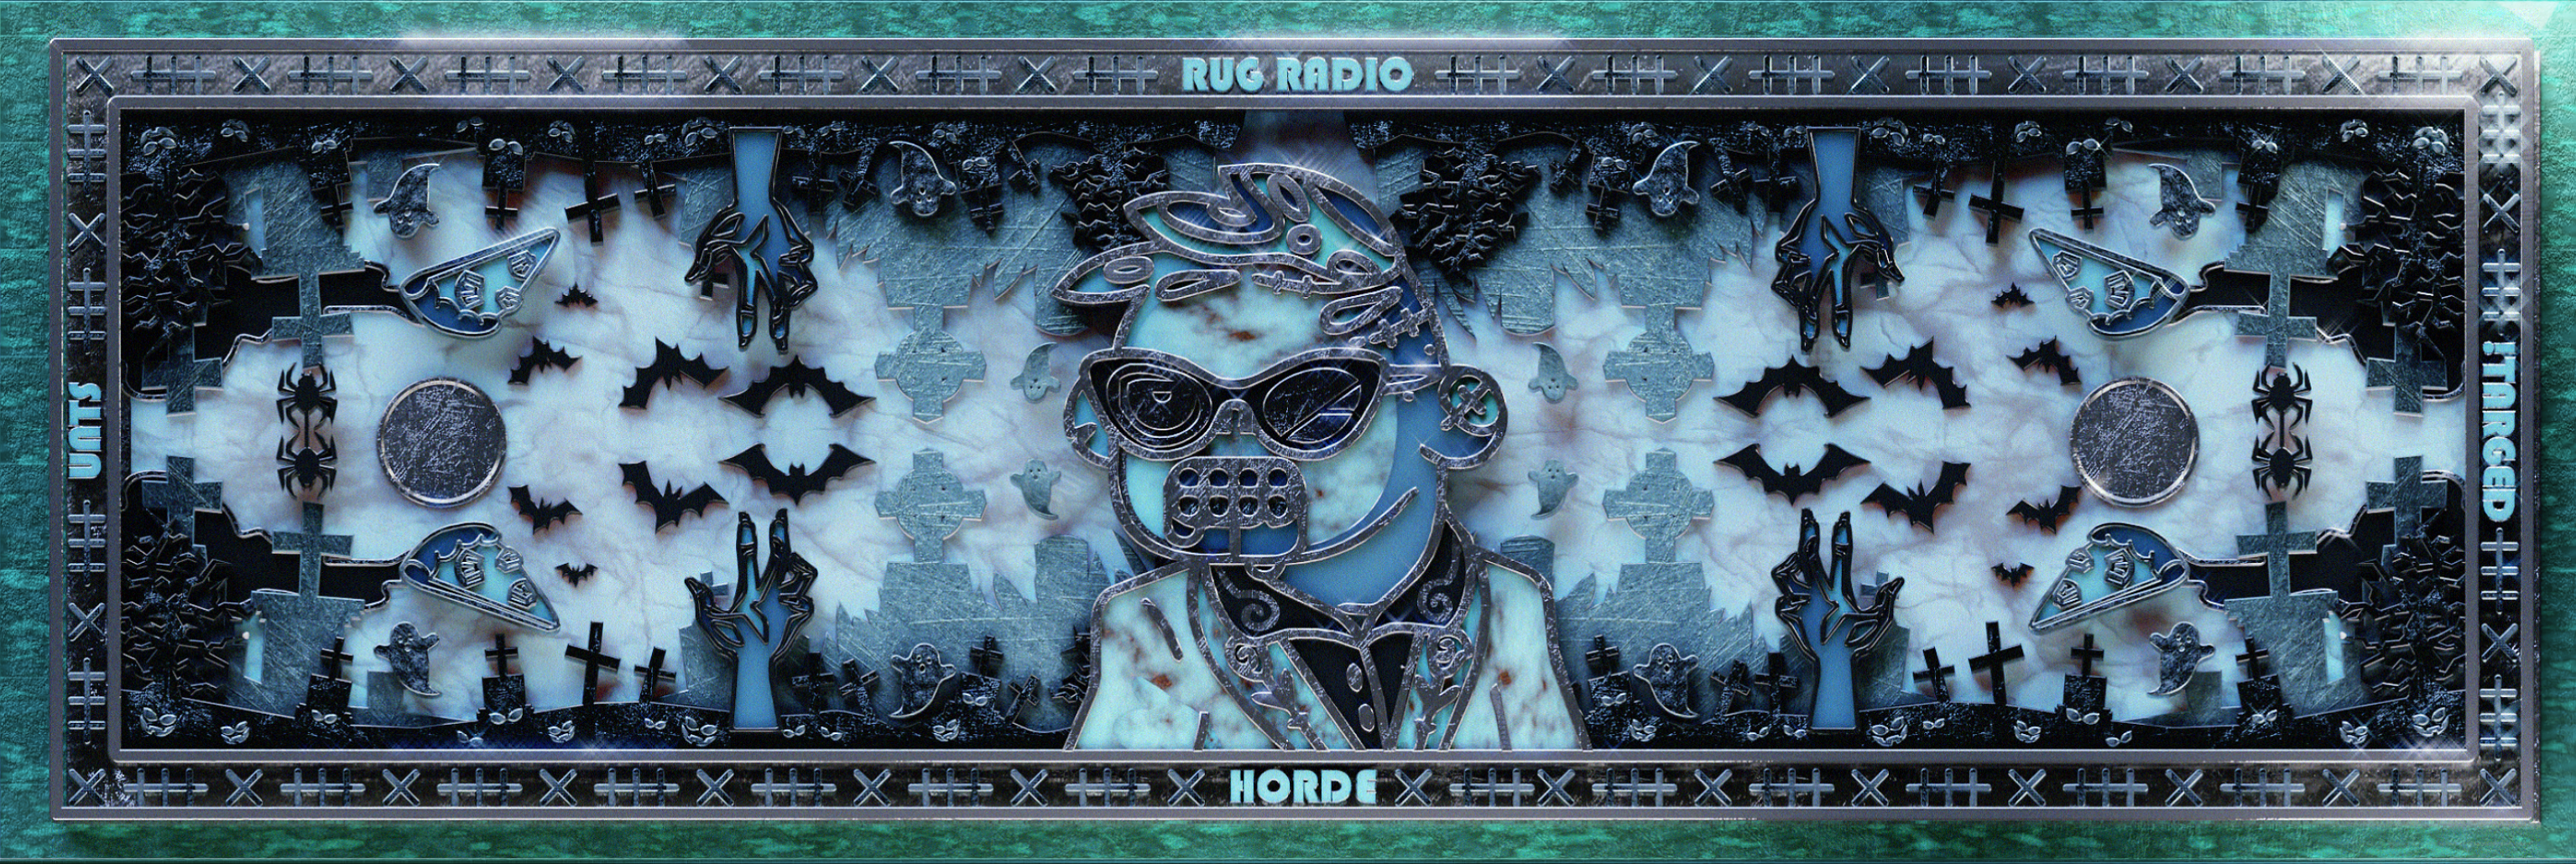 Rug Radio: Scarce 1